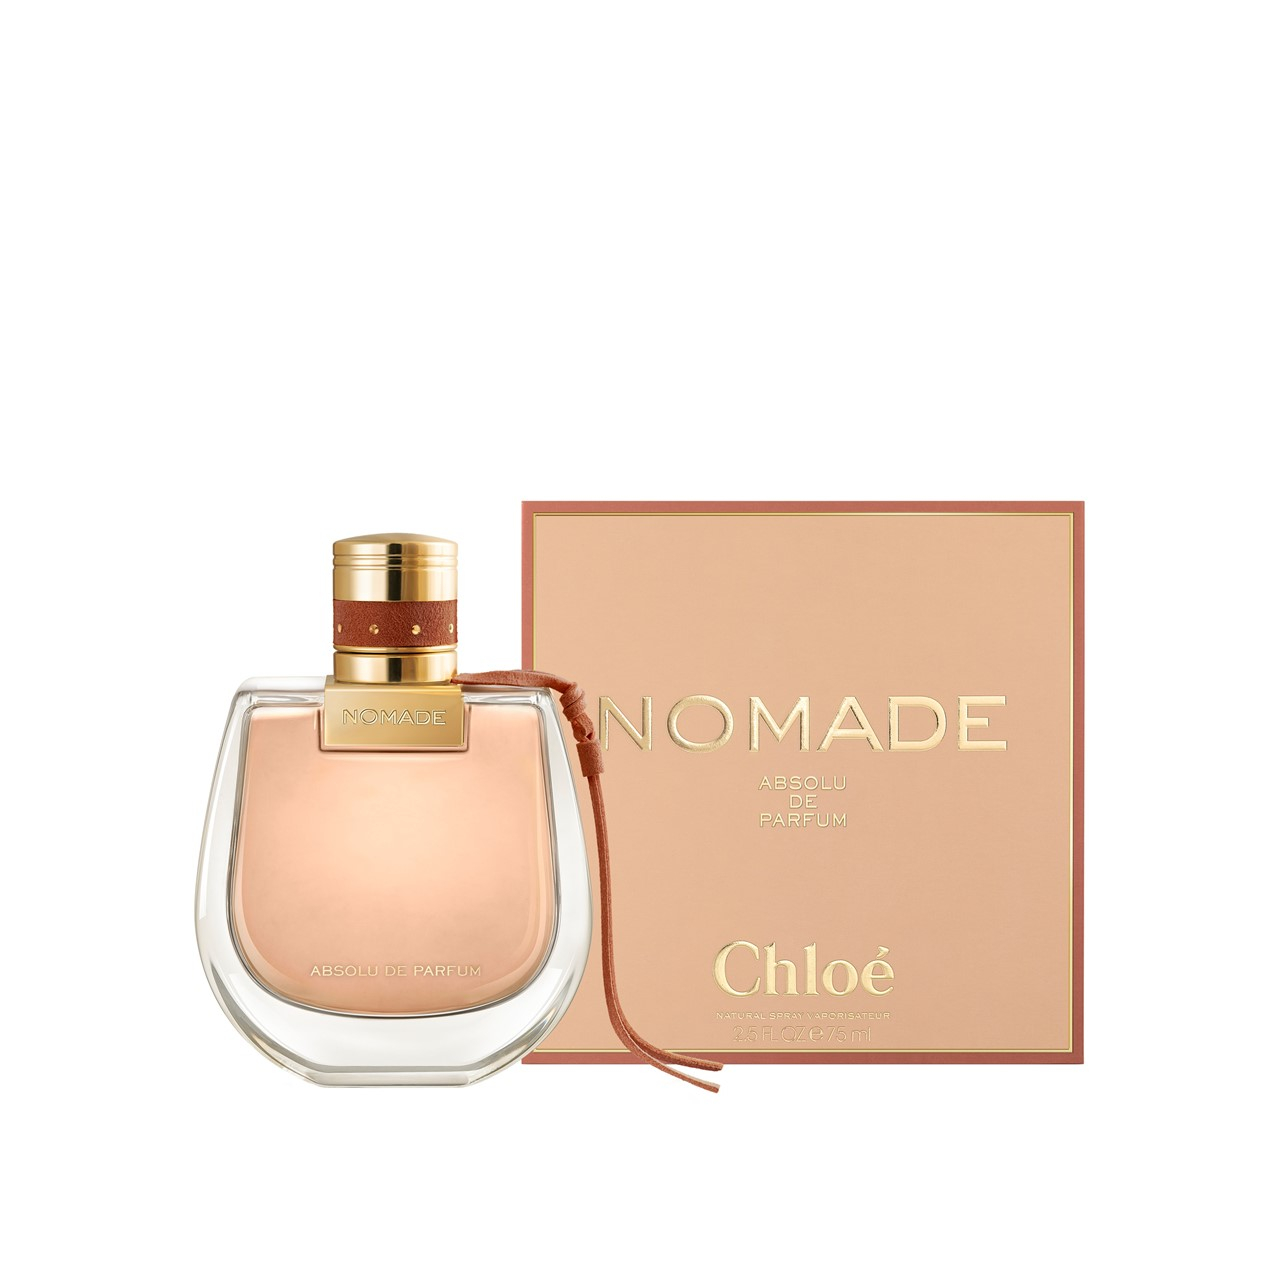 Chloé Nomade Absolu Eau de Parfum 75ml (2.5fl oz)